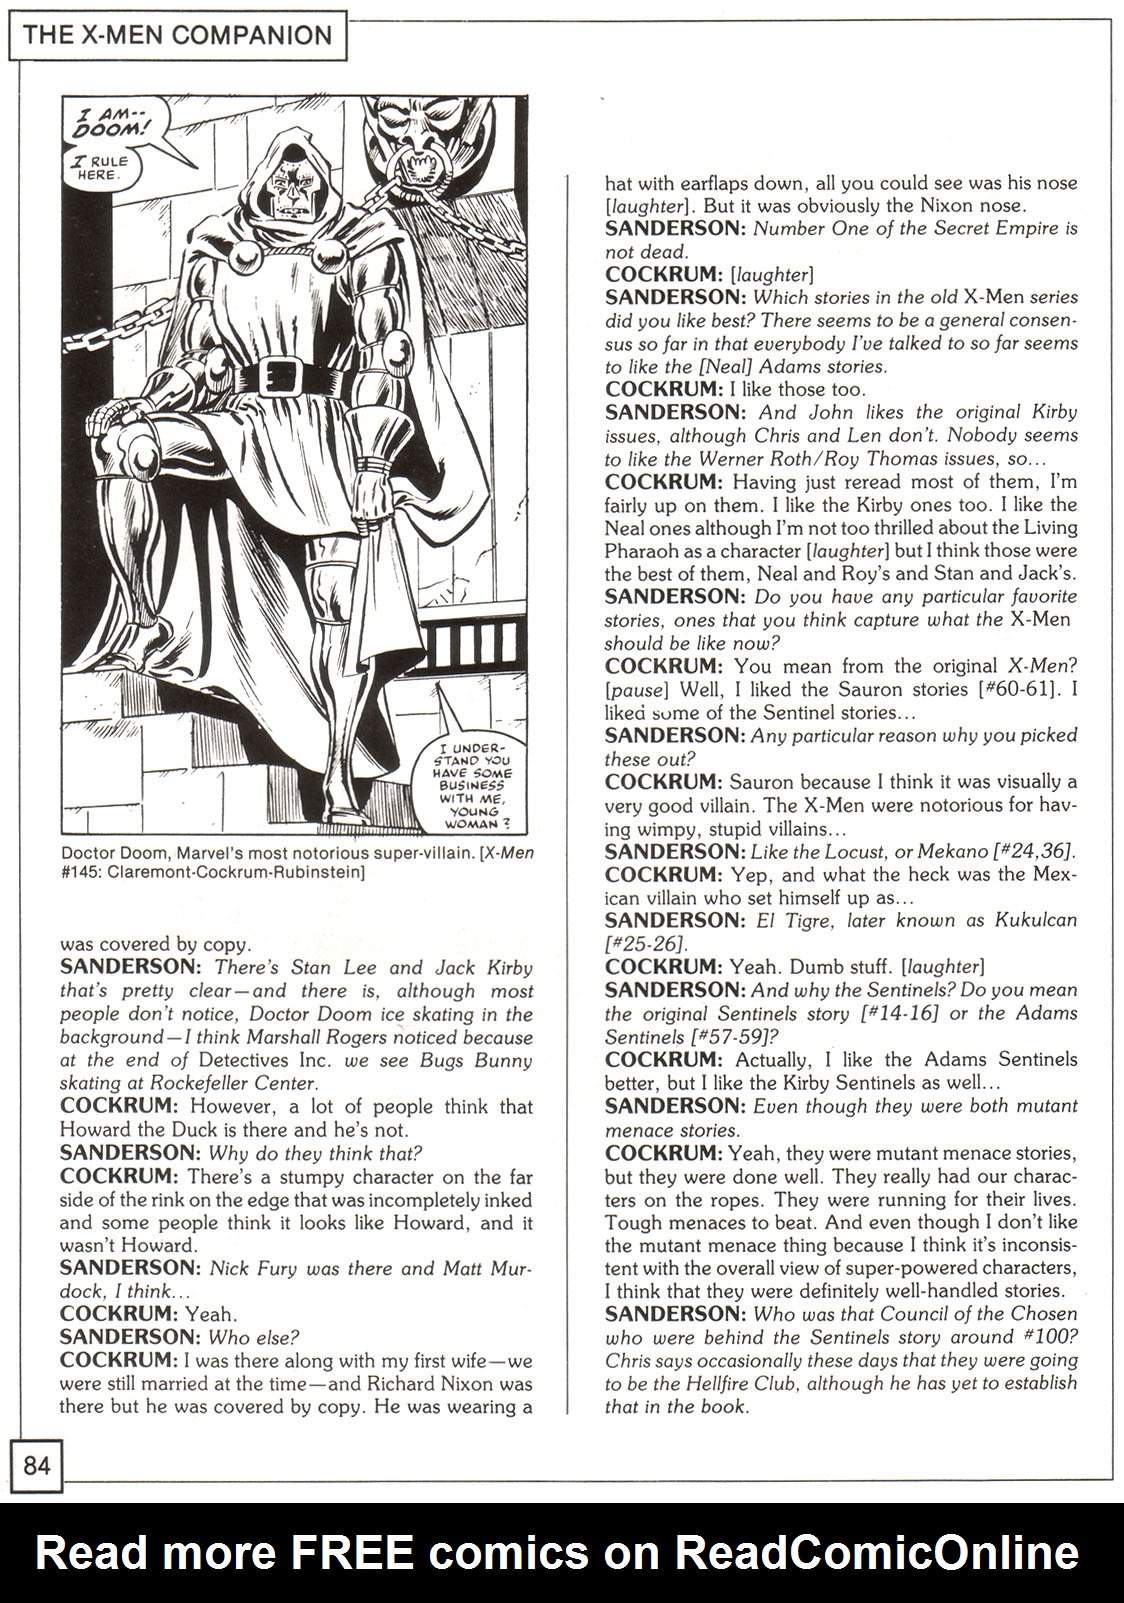 Read online The X-Men Companion comic -  Issue #1 - 84